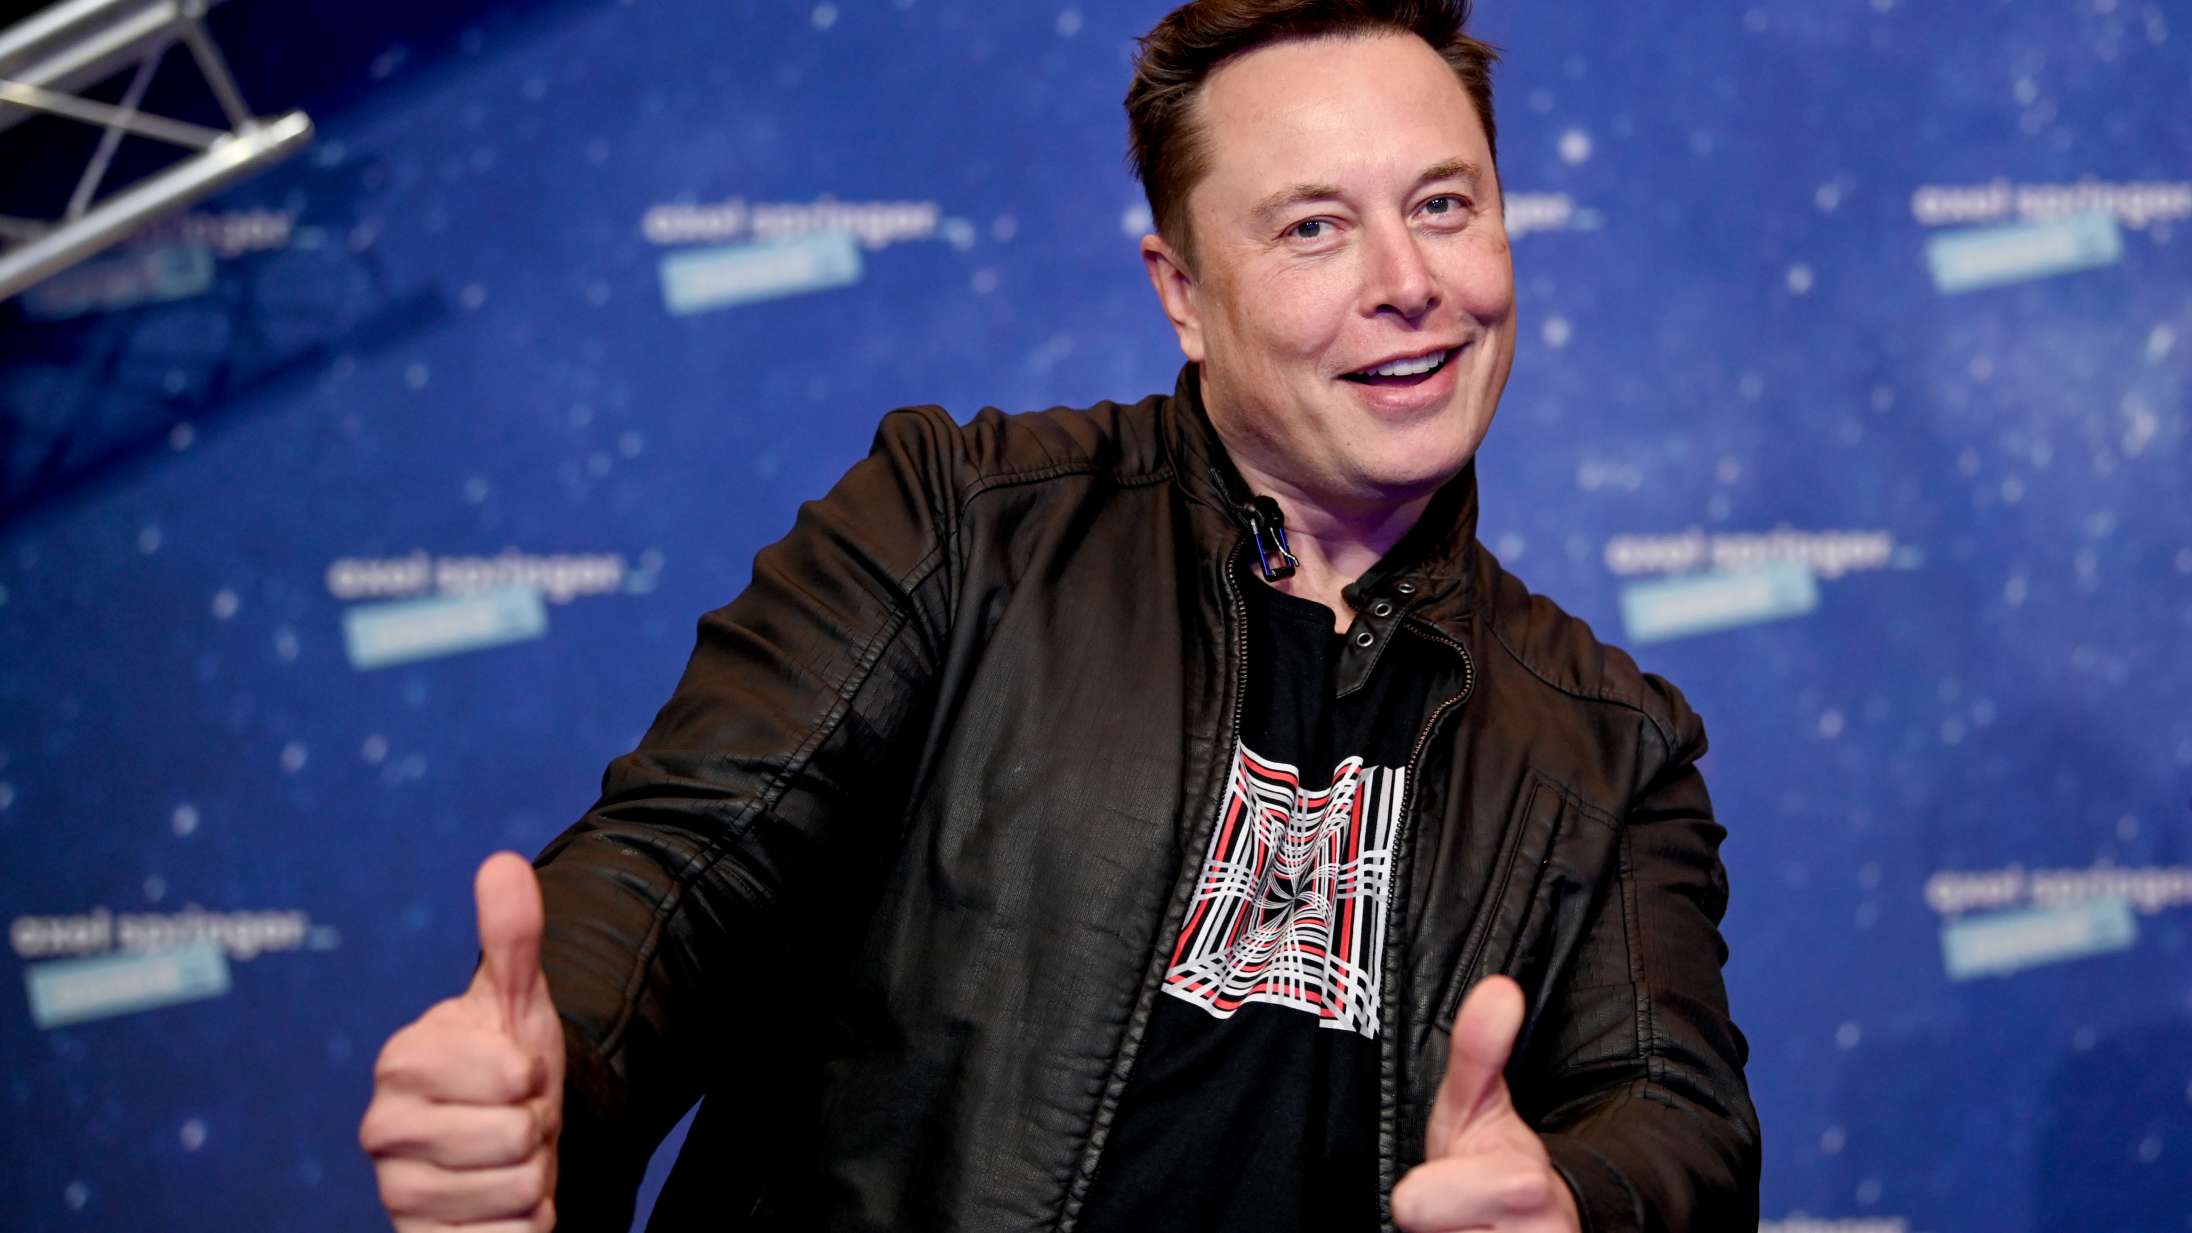 Elon Musks kamp mod falske Twitter-profiler går helt galt med Jesus og en fuckfinger fra Mario